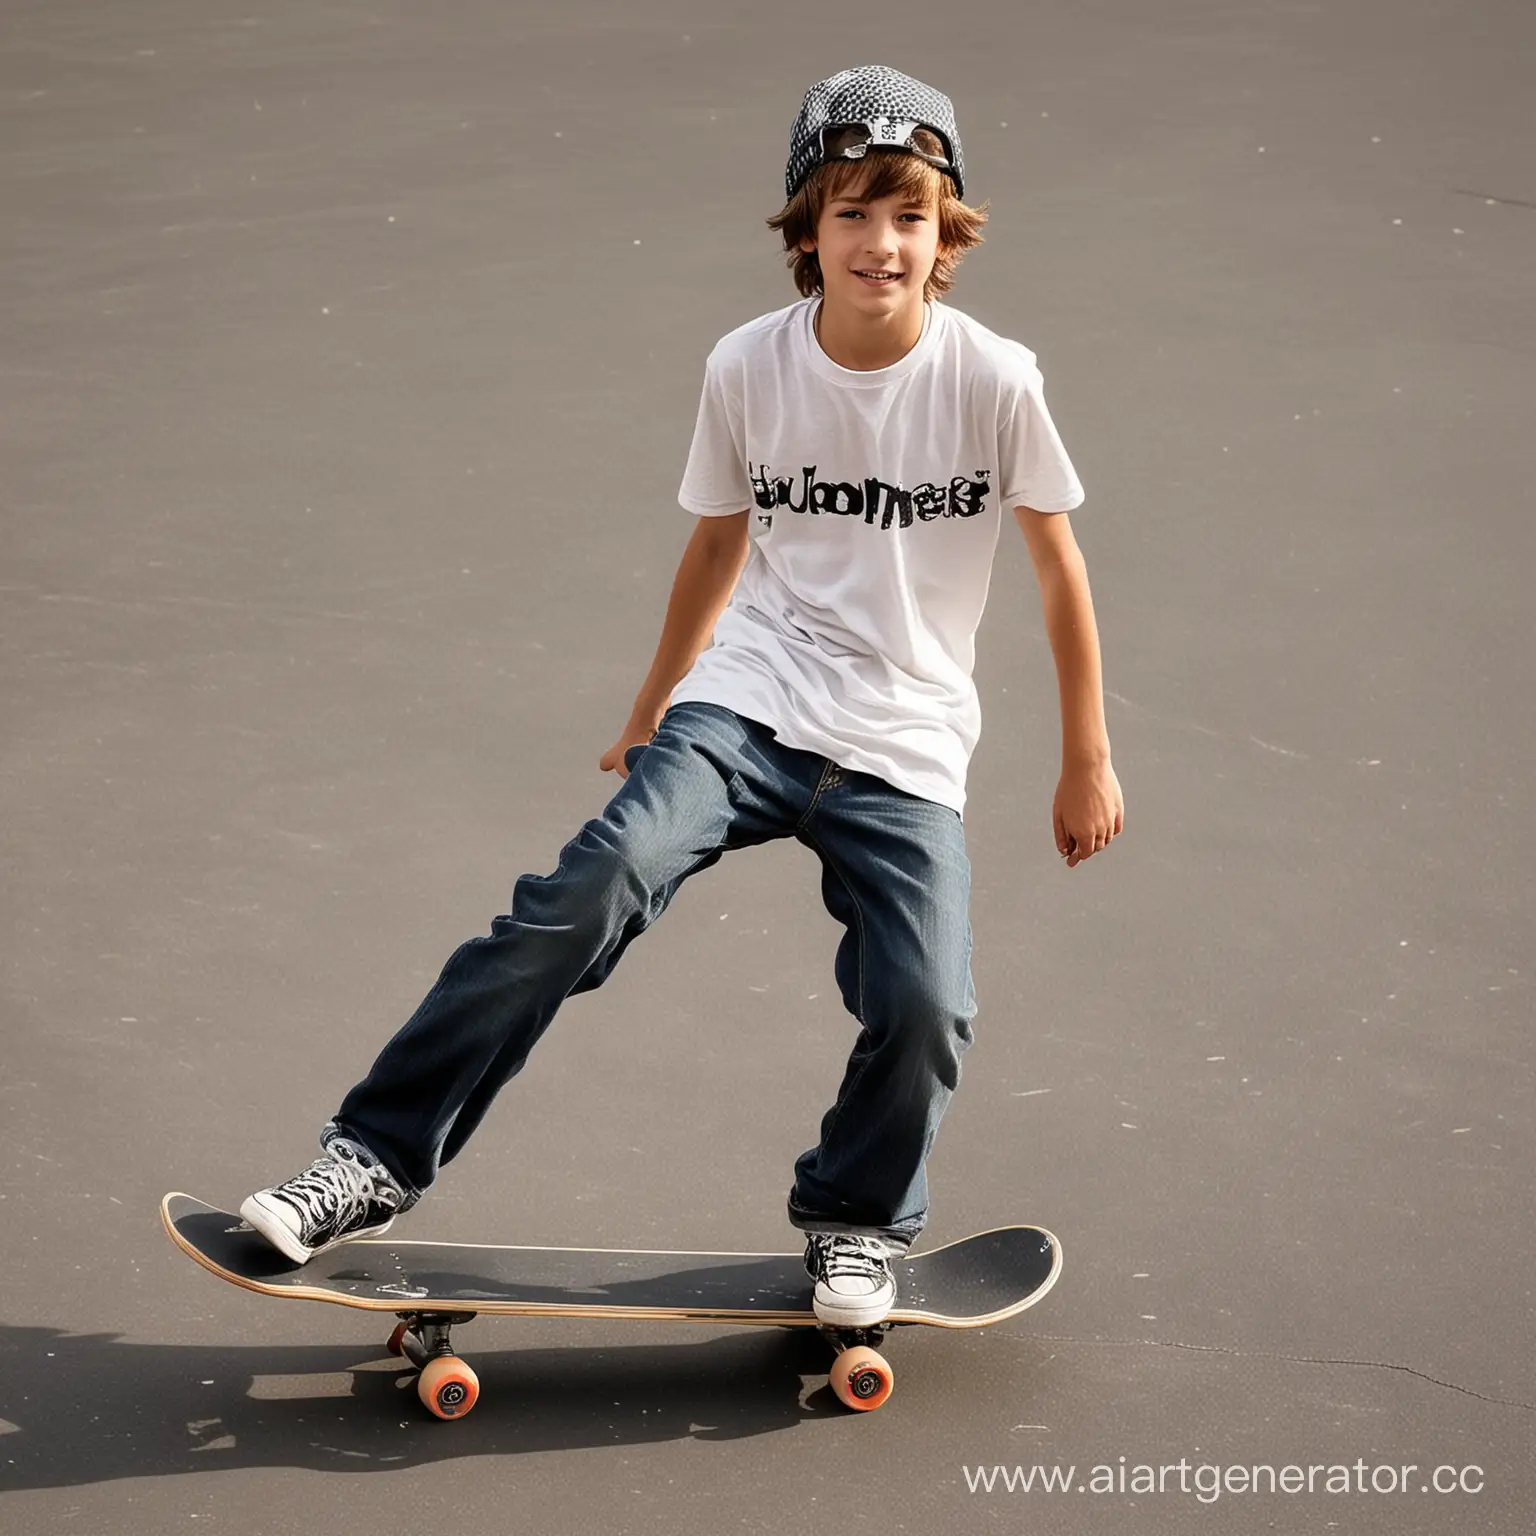 Teen-Boy-Riding-a-Skateboard-in-an-Urban-Environment